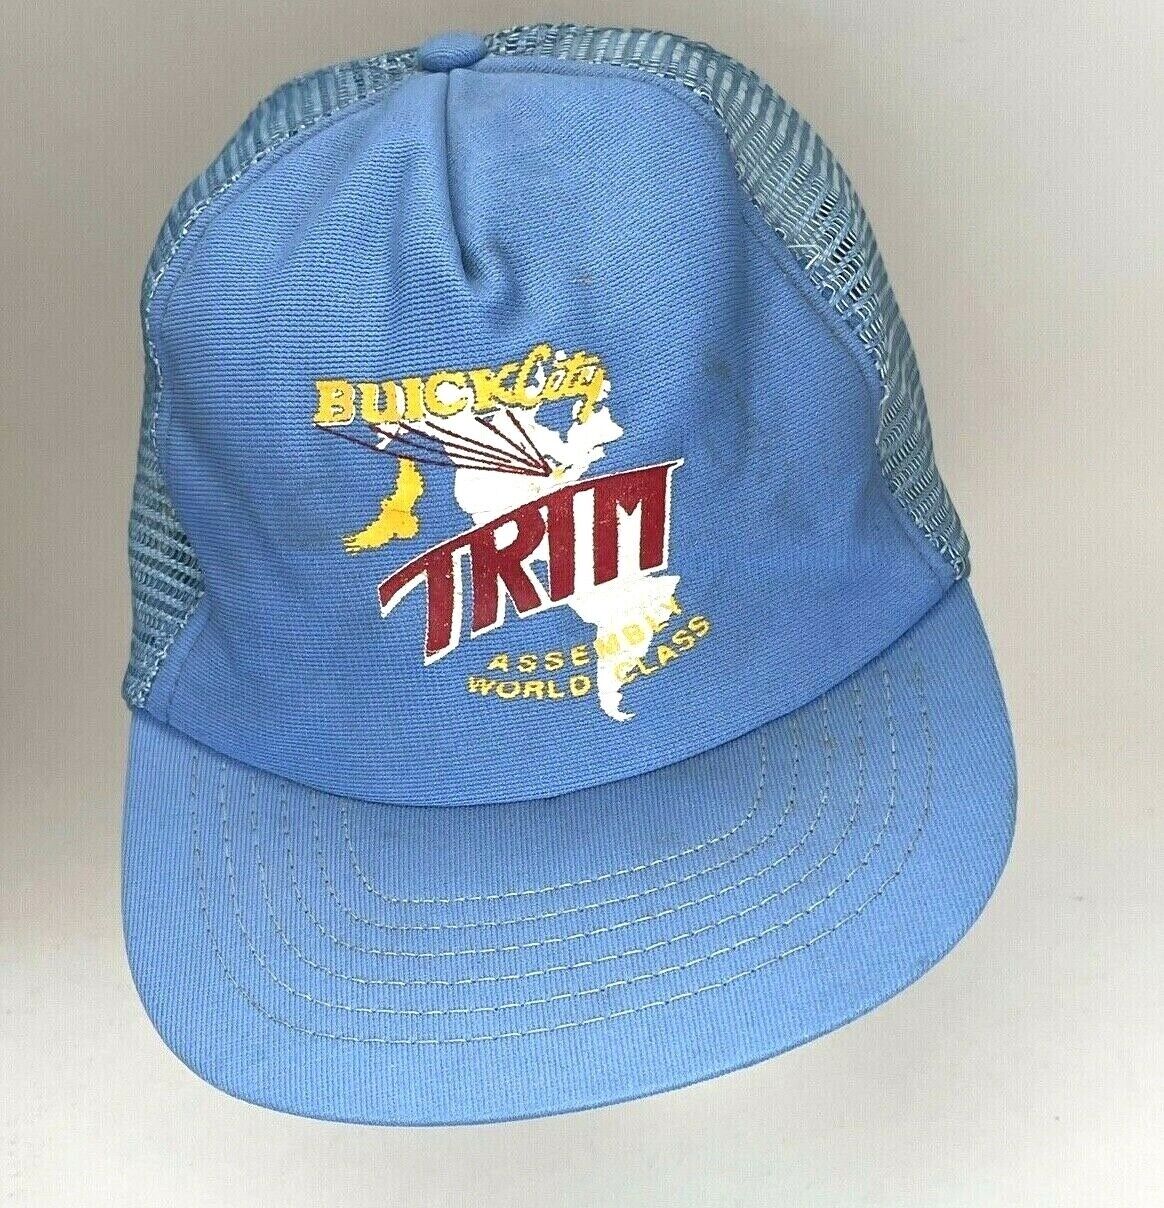 General Motors Buick City Flint Michigan Vintage Blue Trucker Hat 1990s 